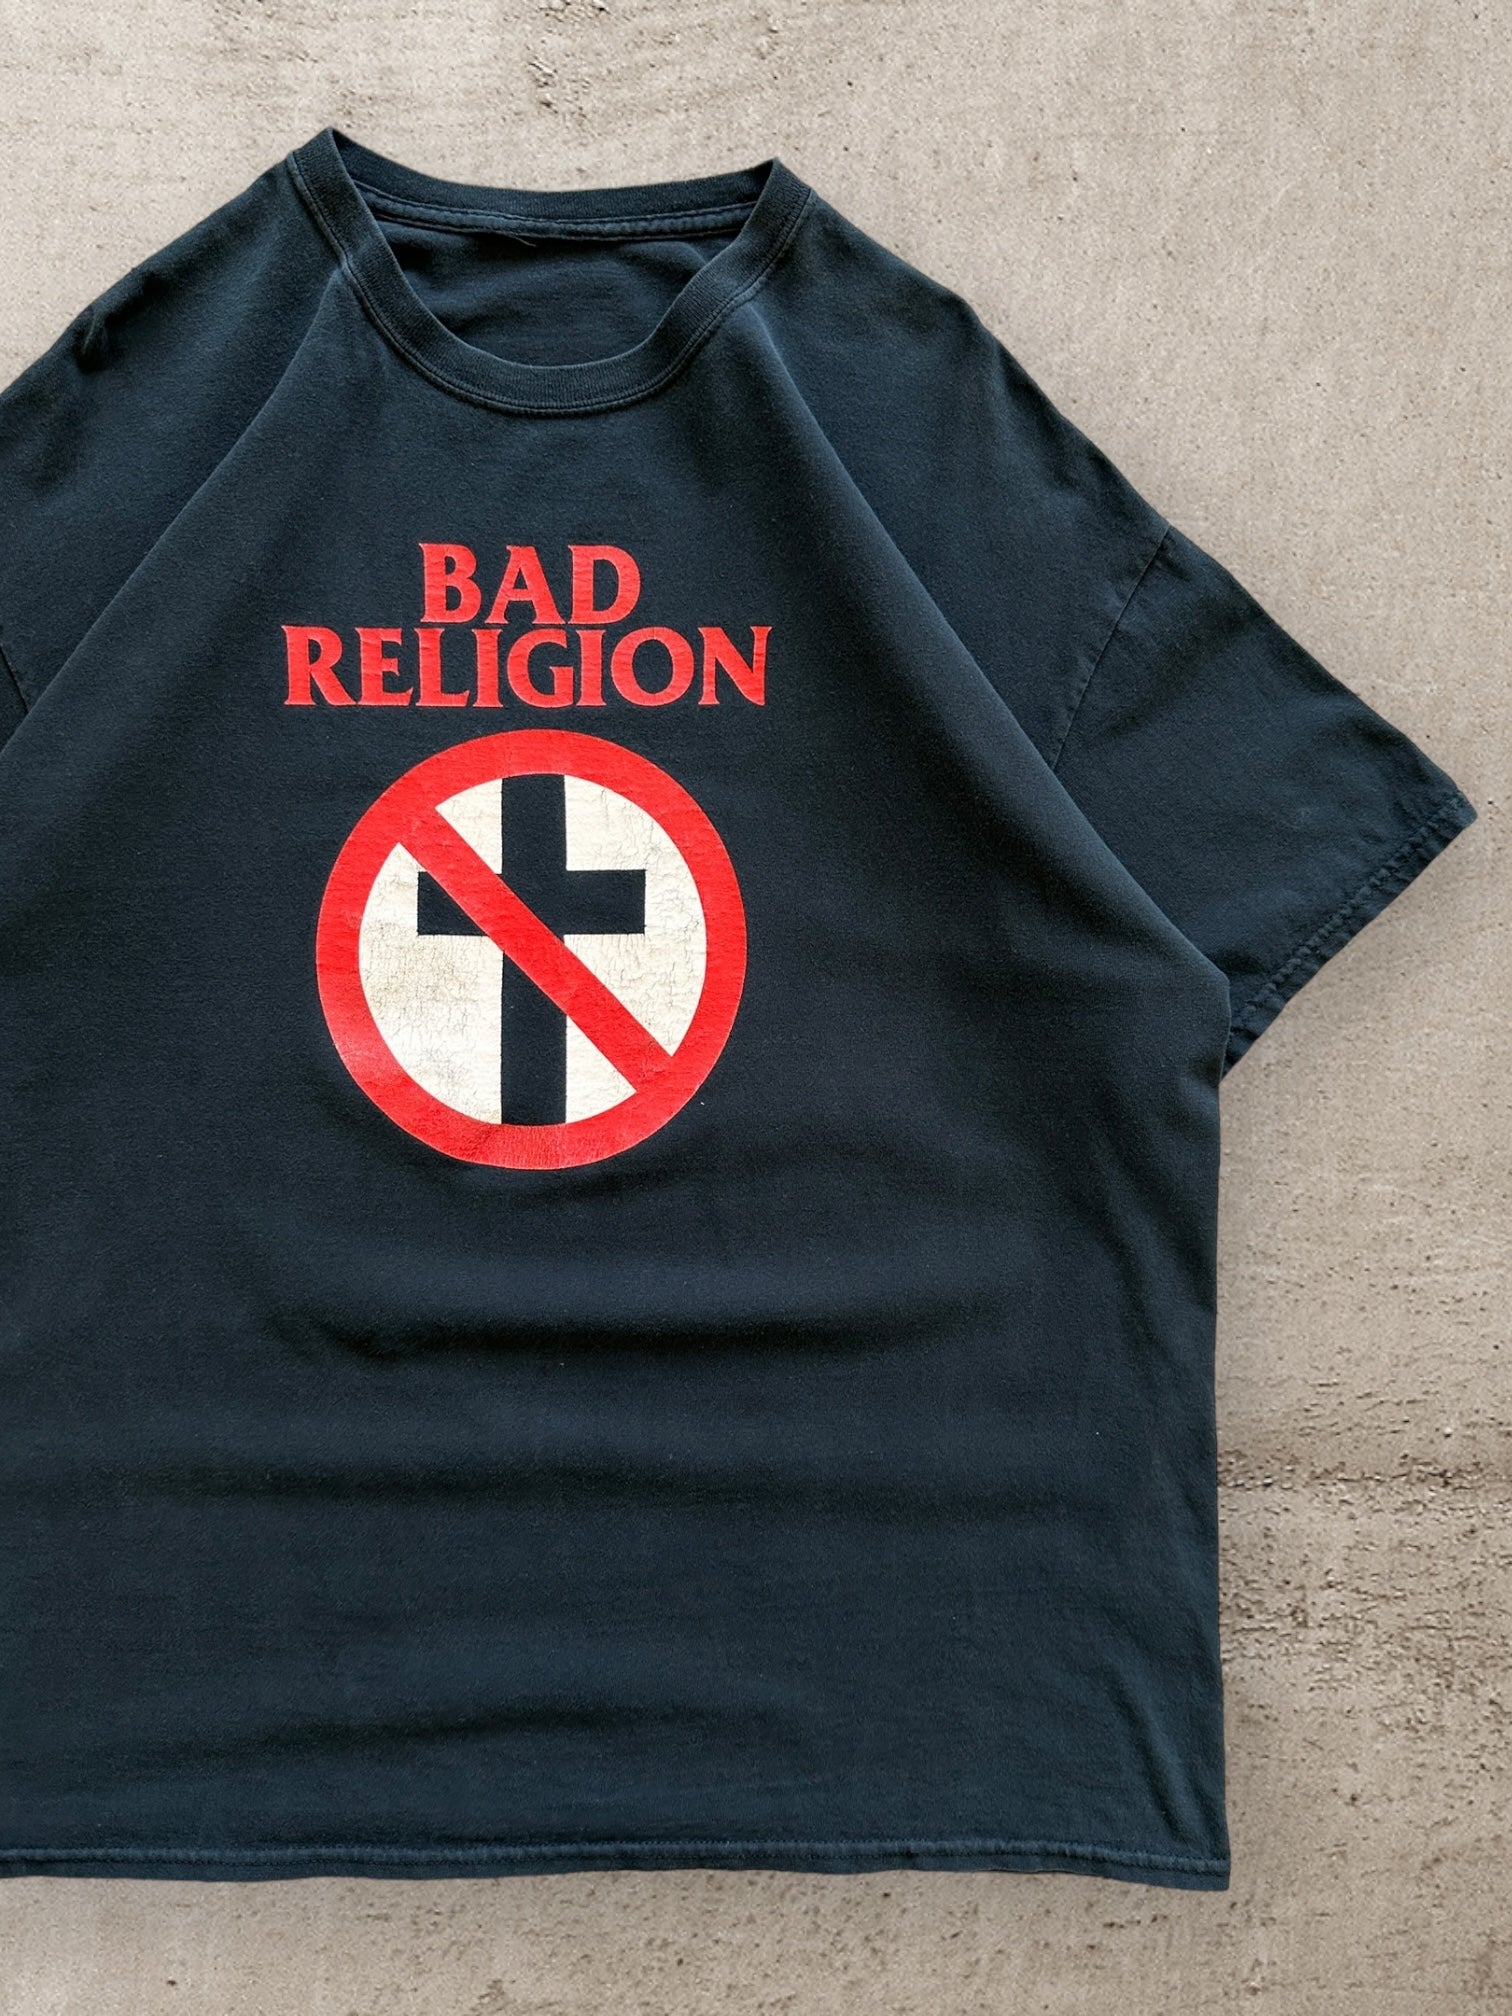 00's Bad Religion T-Shirt - XL